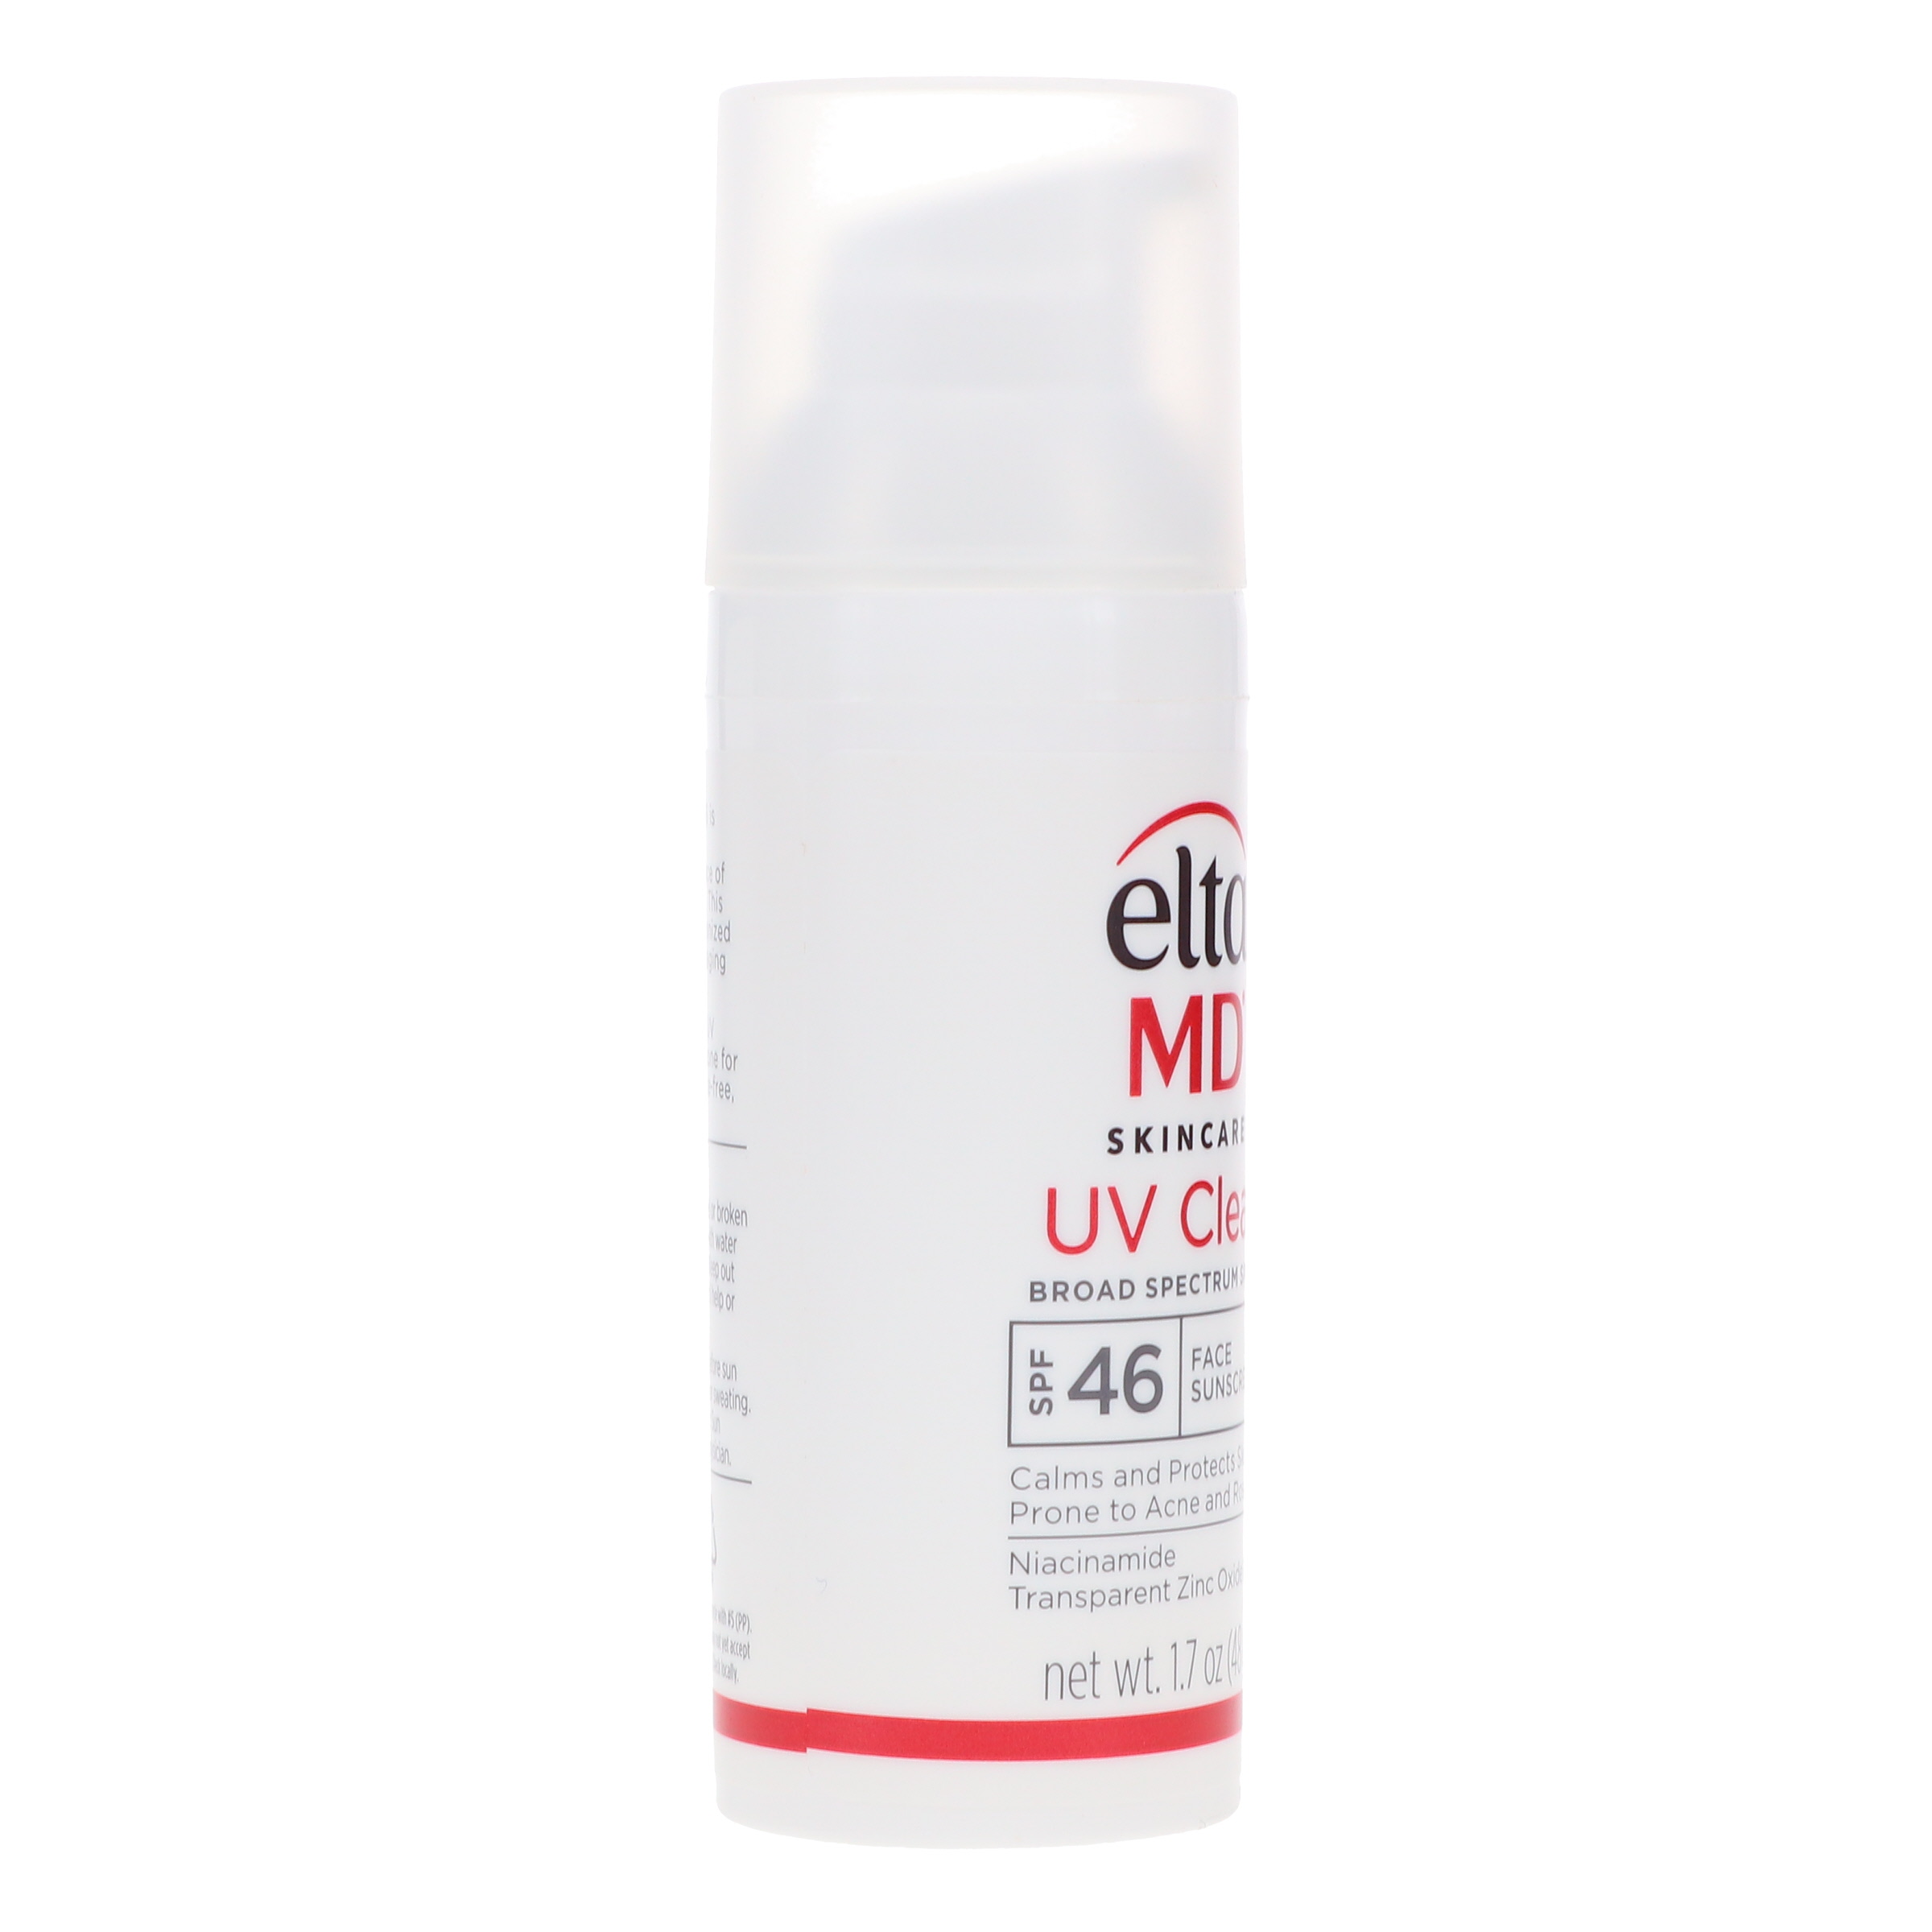 EltaMD UV Clear SPF 46 Broad Spectrum Moisturizing Facial Sunscreen 1.7 oz (48g) - image 6 of 8